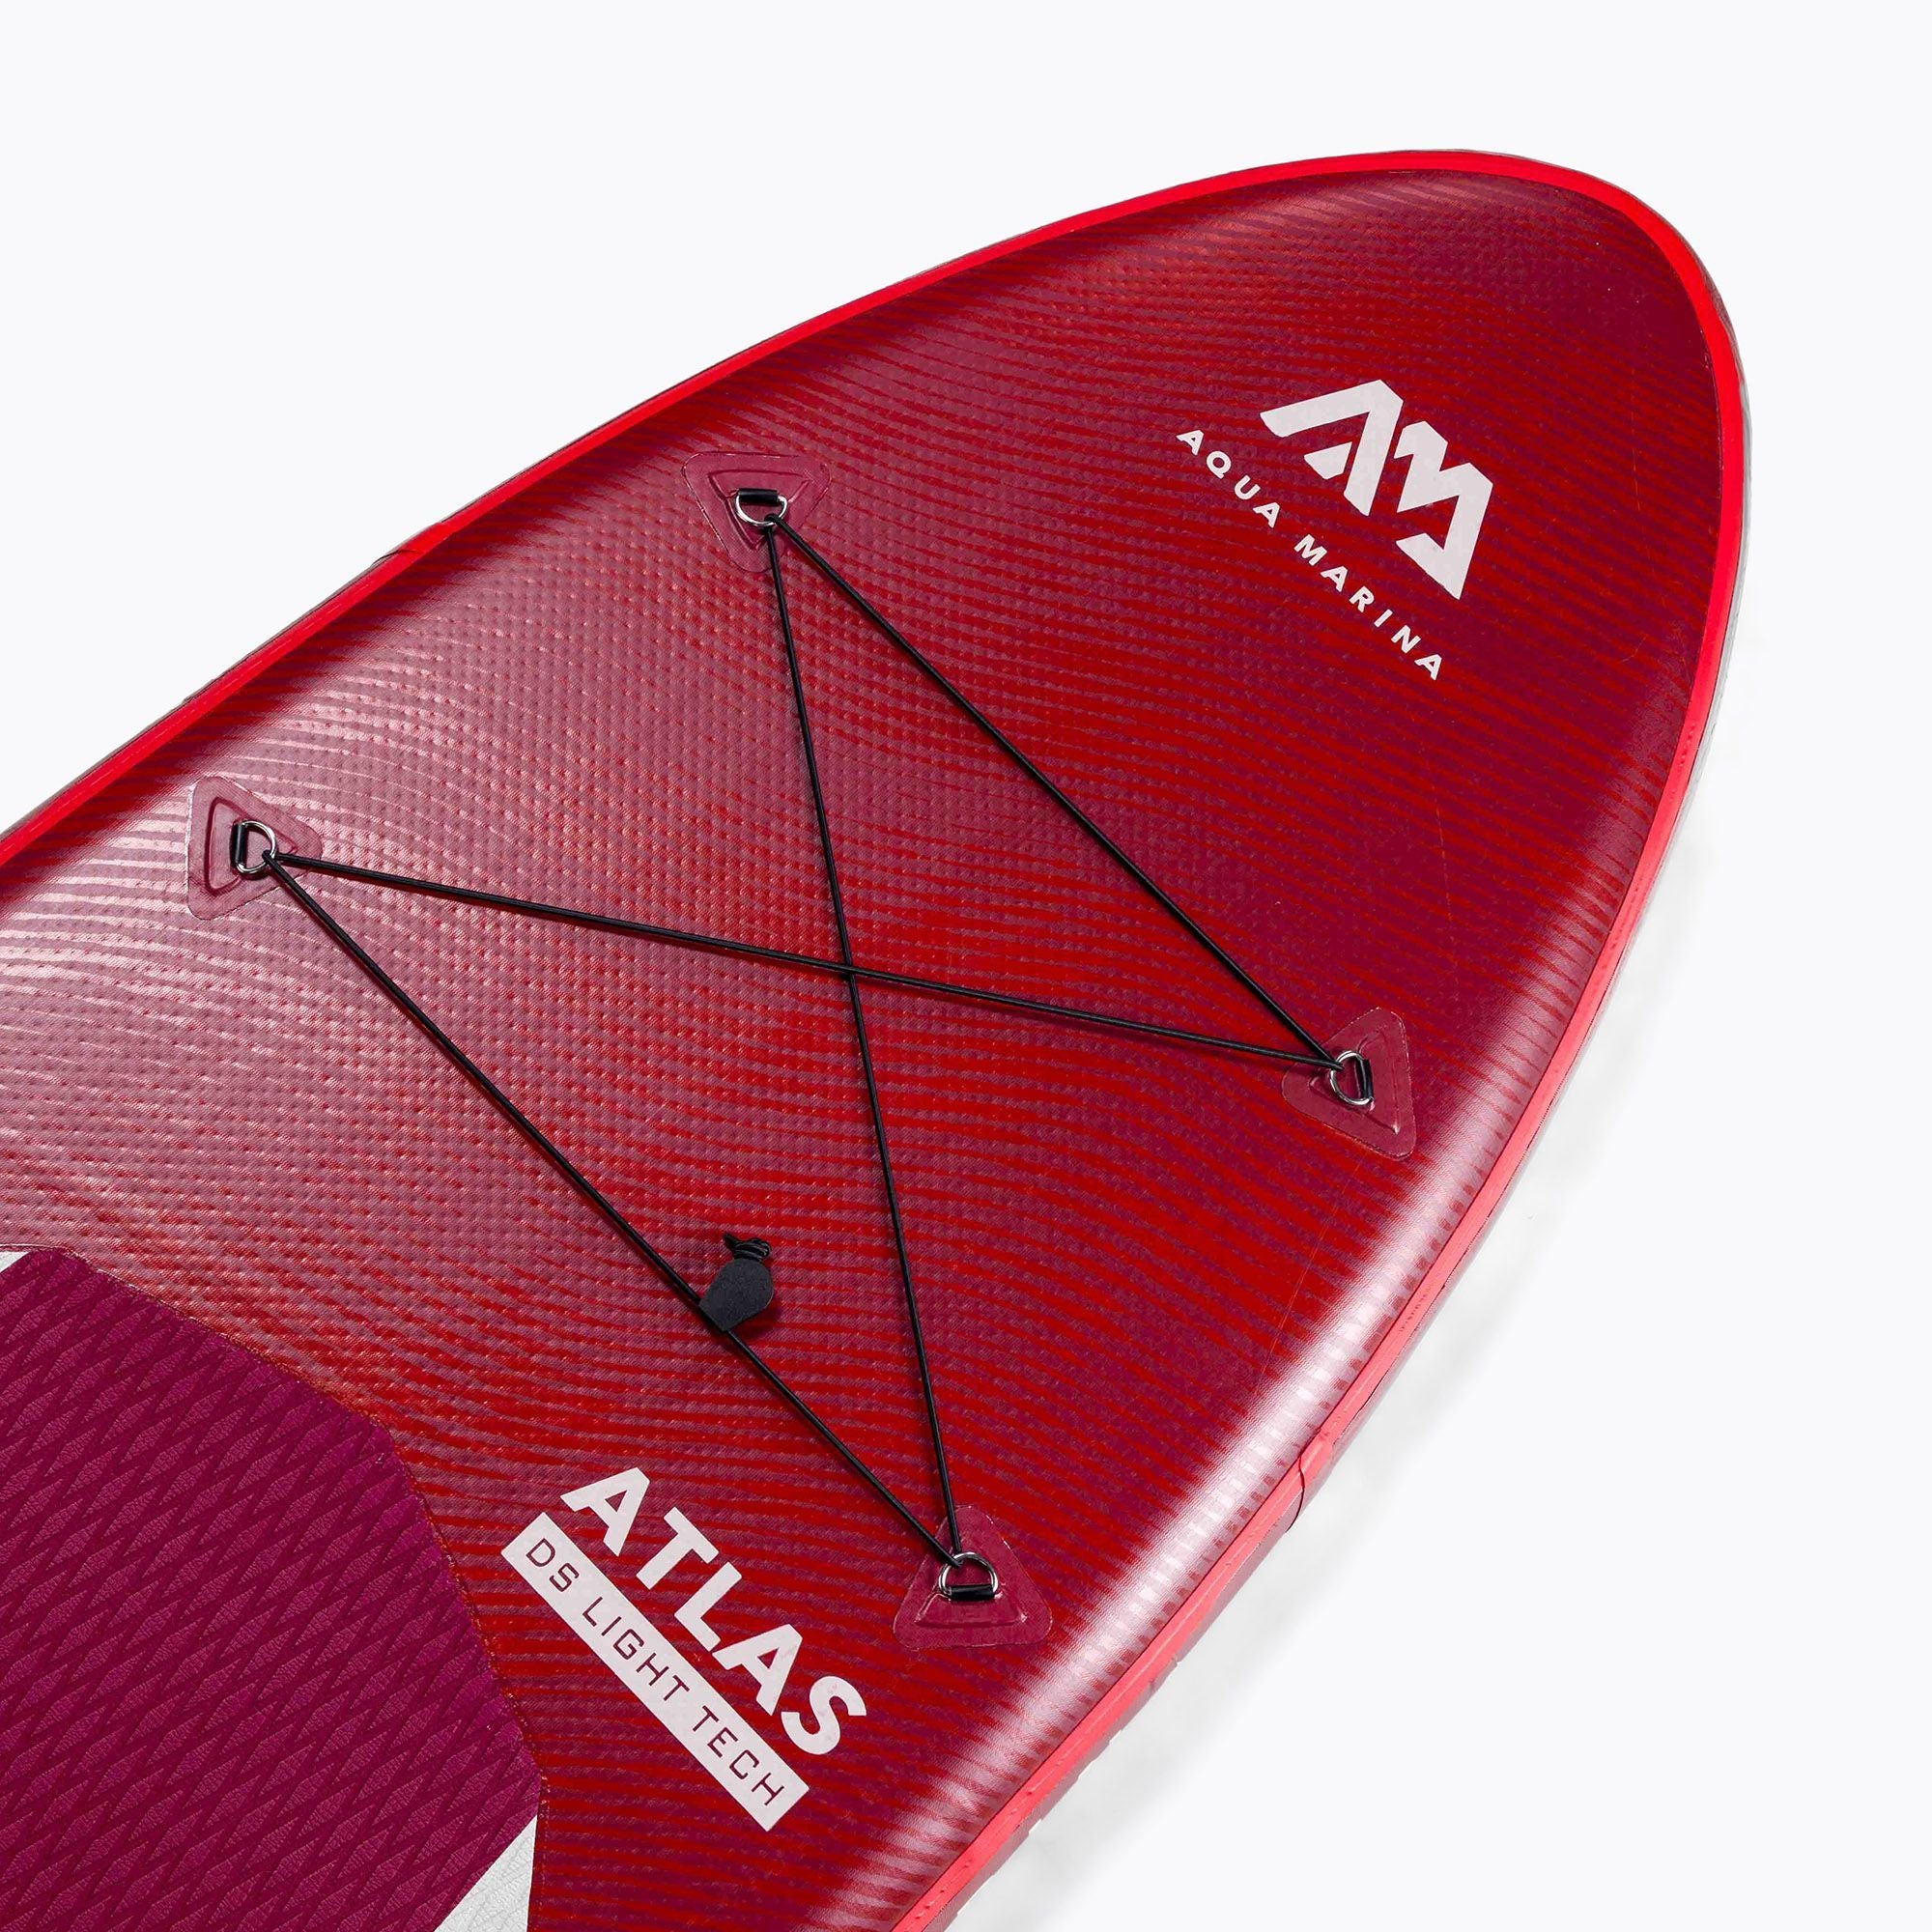 Aquamarina BT-21ATP - All-Around Advanced, Atlas Inflatable Paddle Board 12'0"x34"x6"